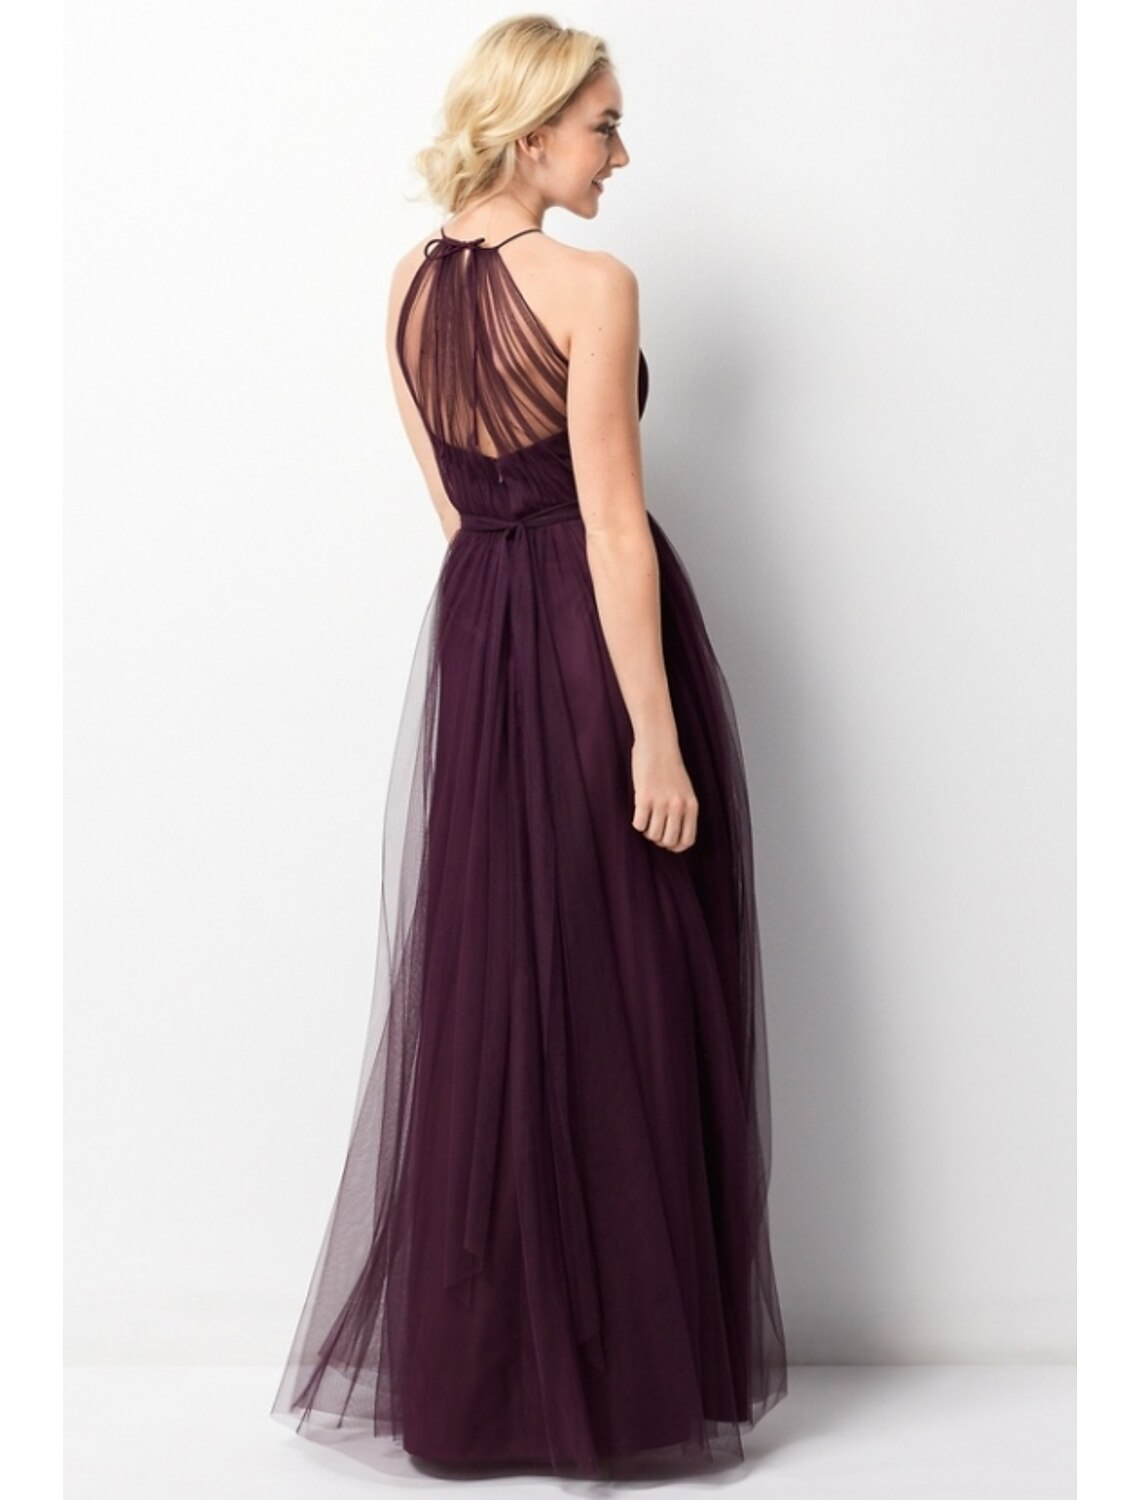 A-Line Bridesmaid Dress Halter Neck Sleeveless Elegant Floor Length Chiffon / Tulle with